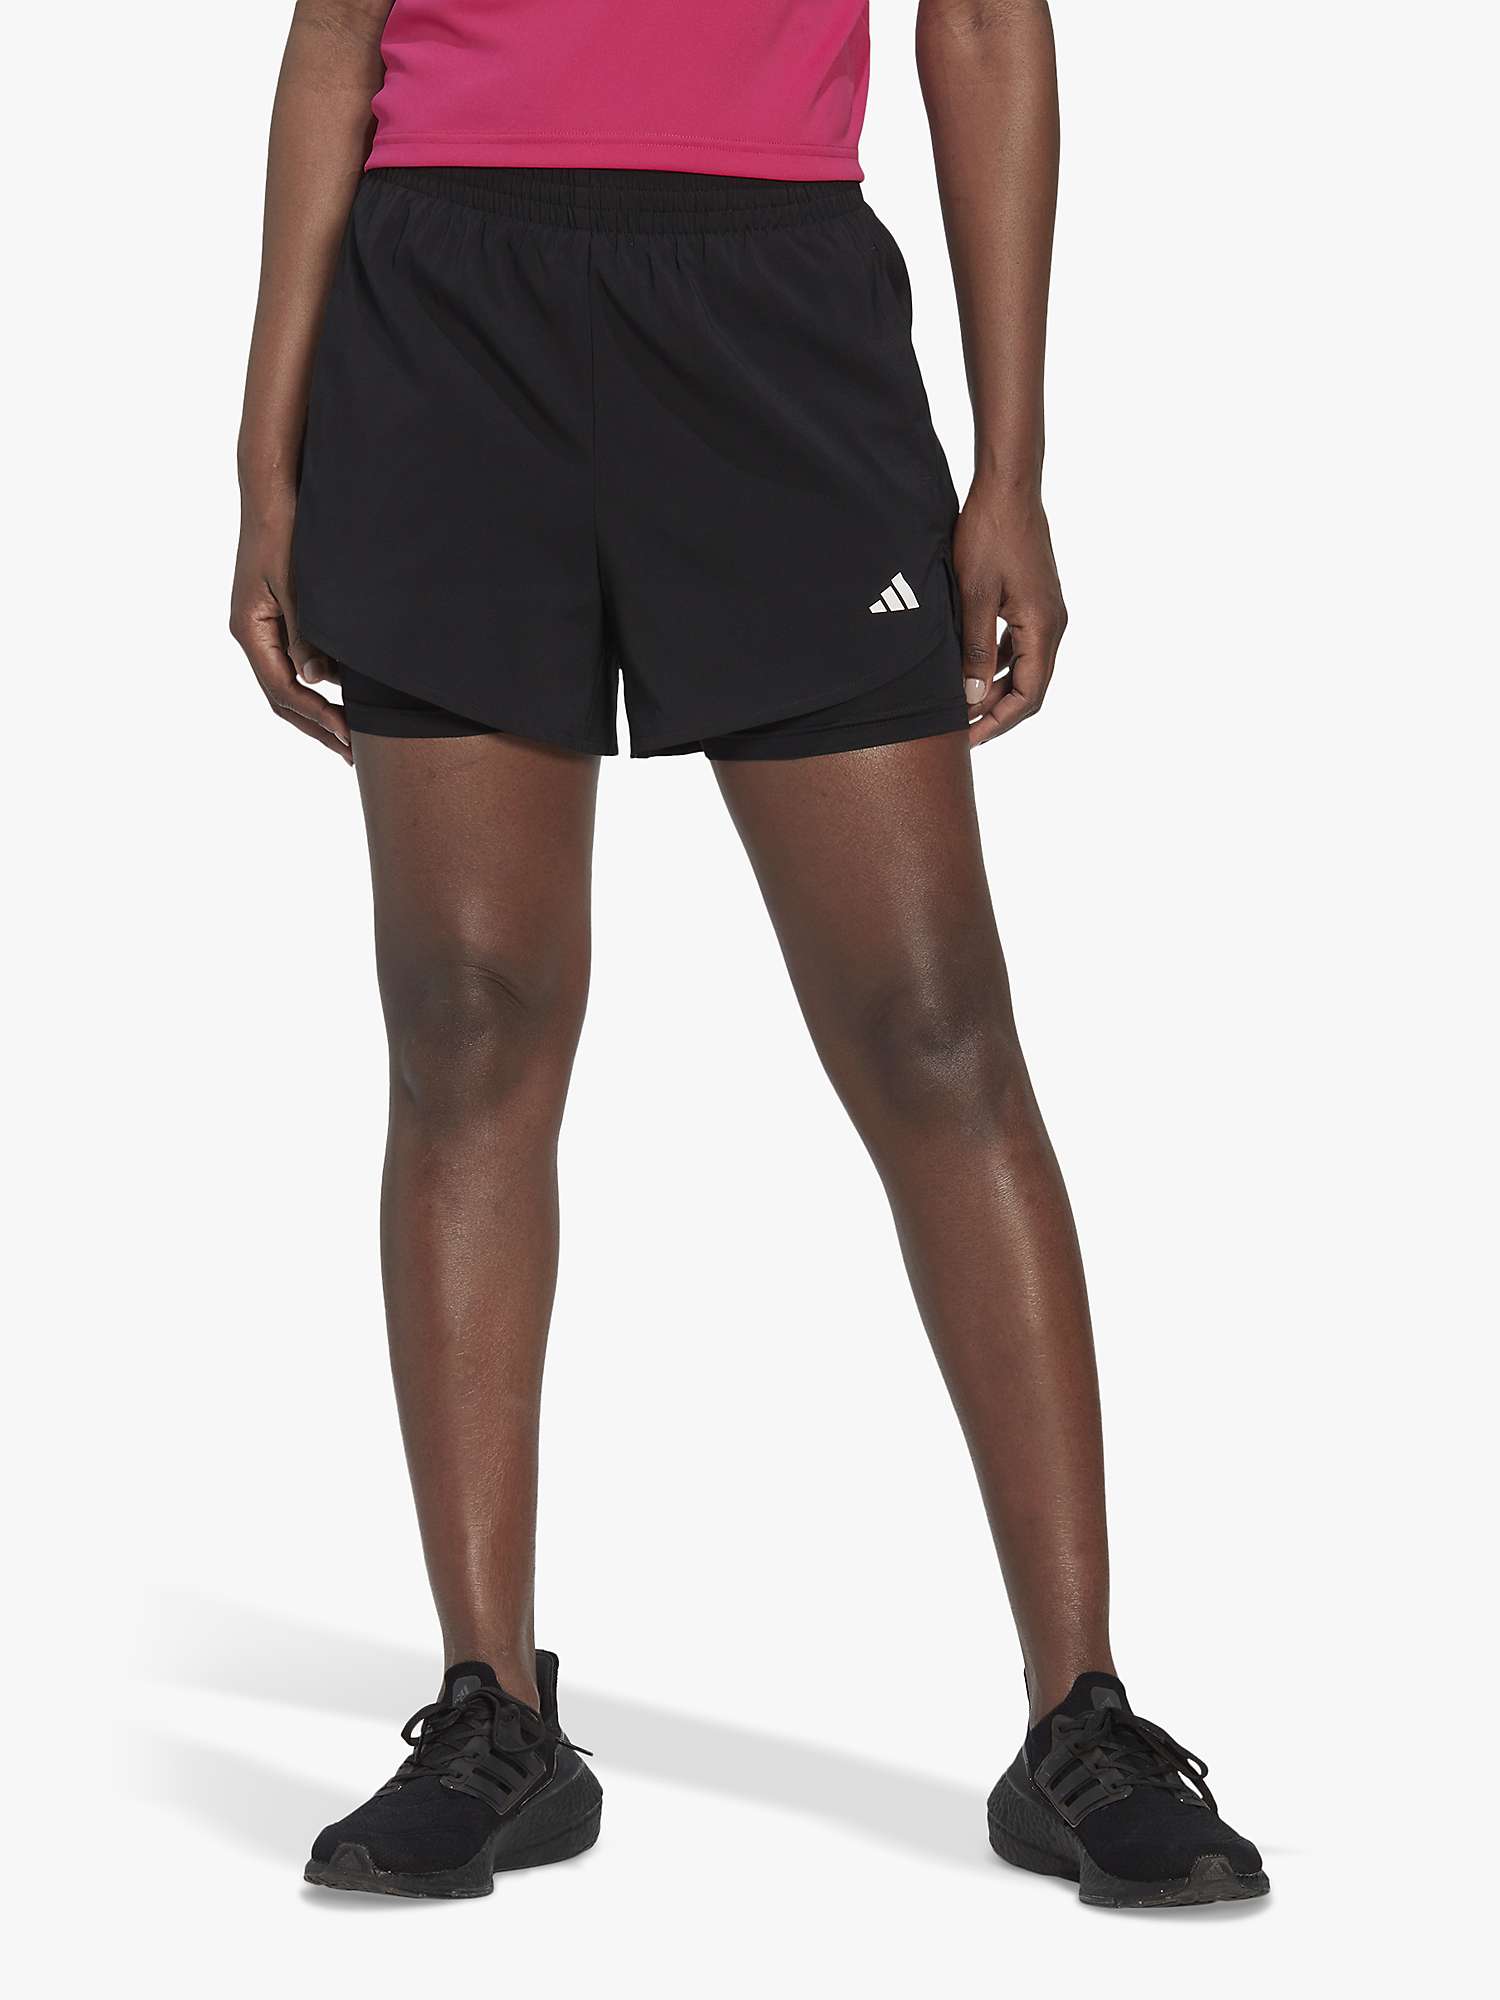 Buy adidas Aeroready Minimal 2 in 1 Shorts, Black Online at johnlewis.com